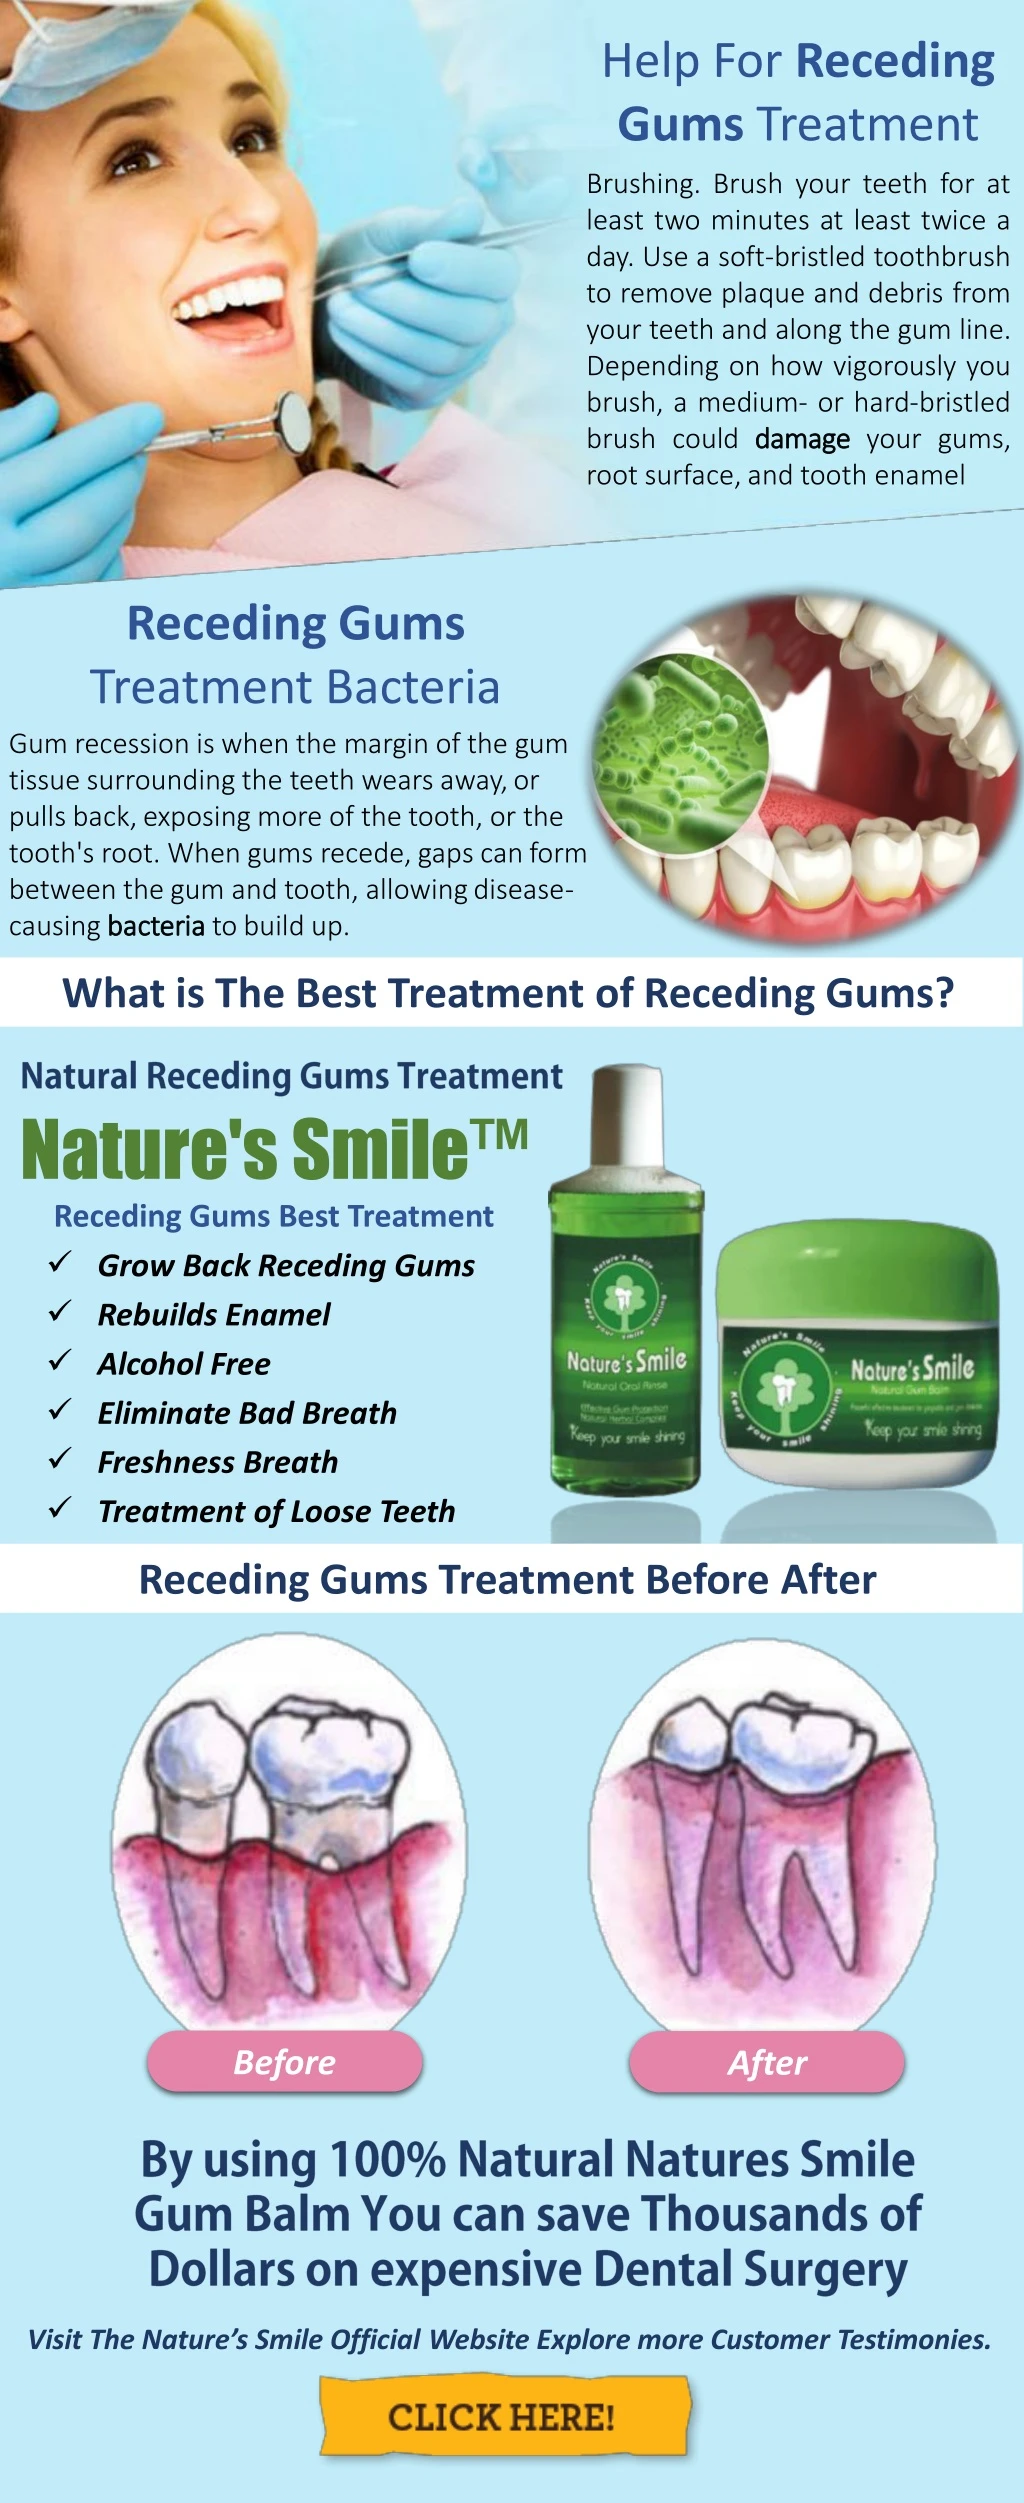 help for receding gums treatment